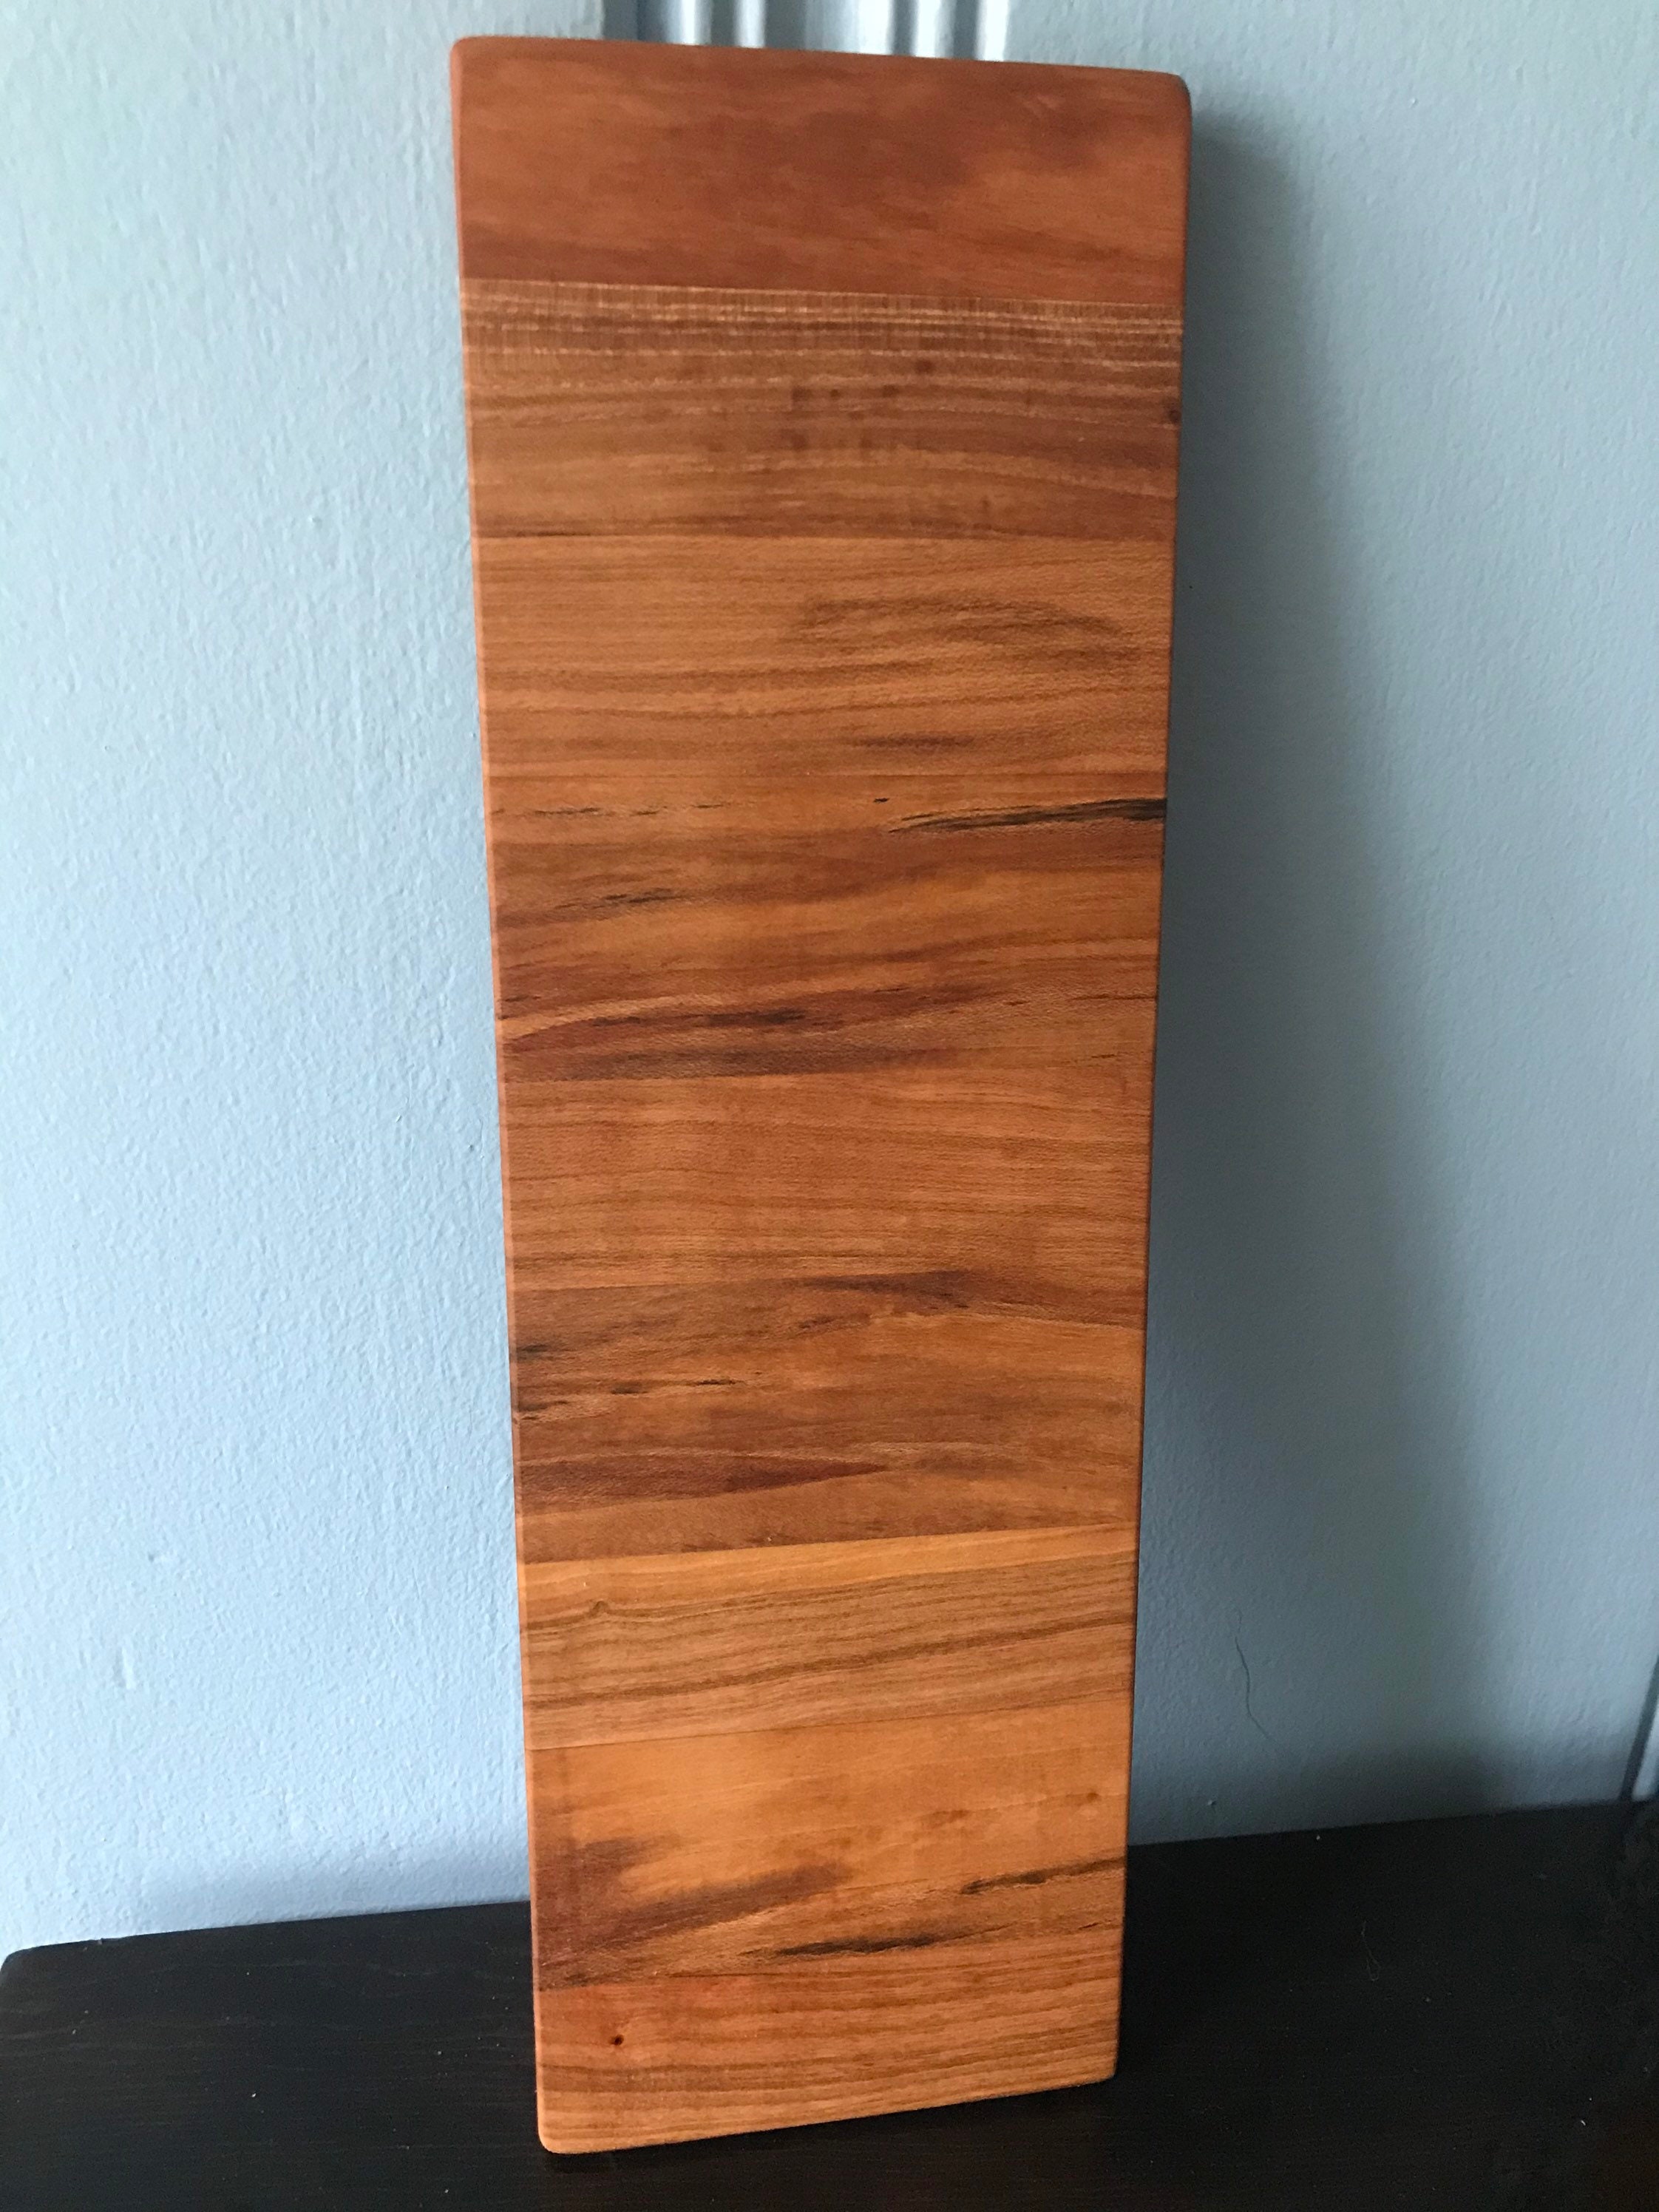 Stovetop cutting board : r/Wellthatsucks